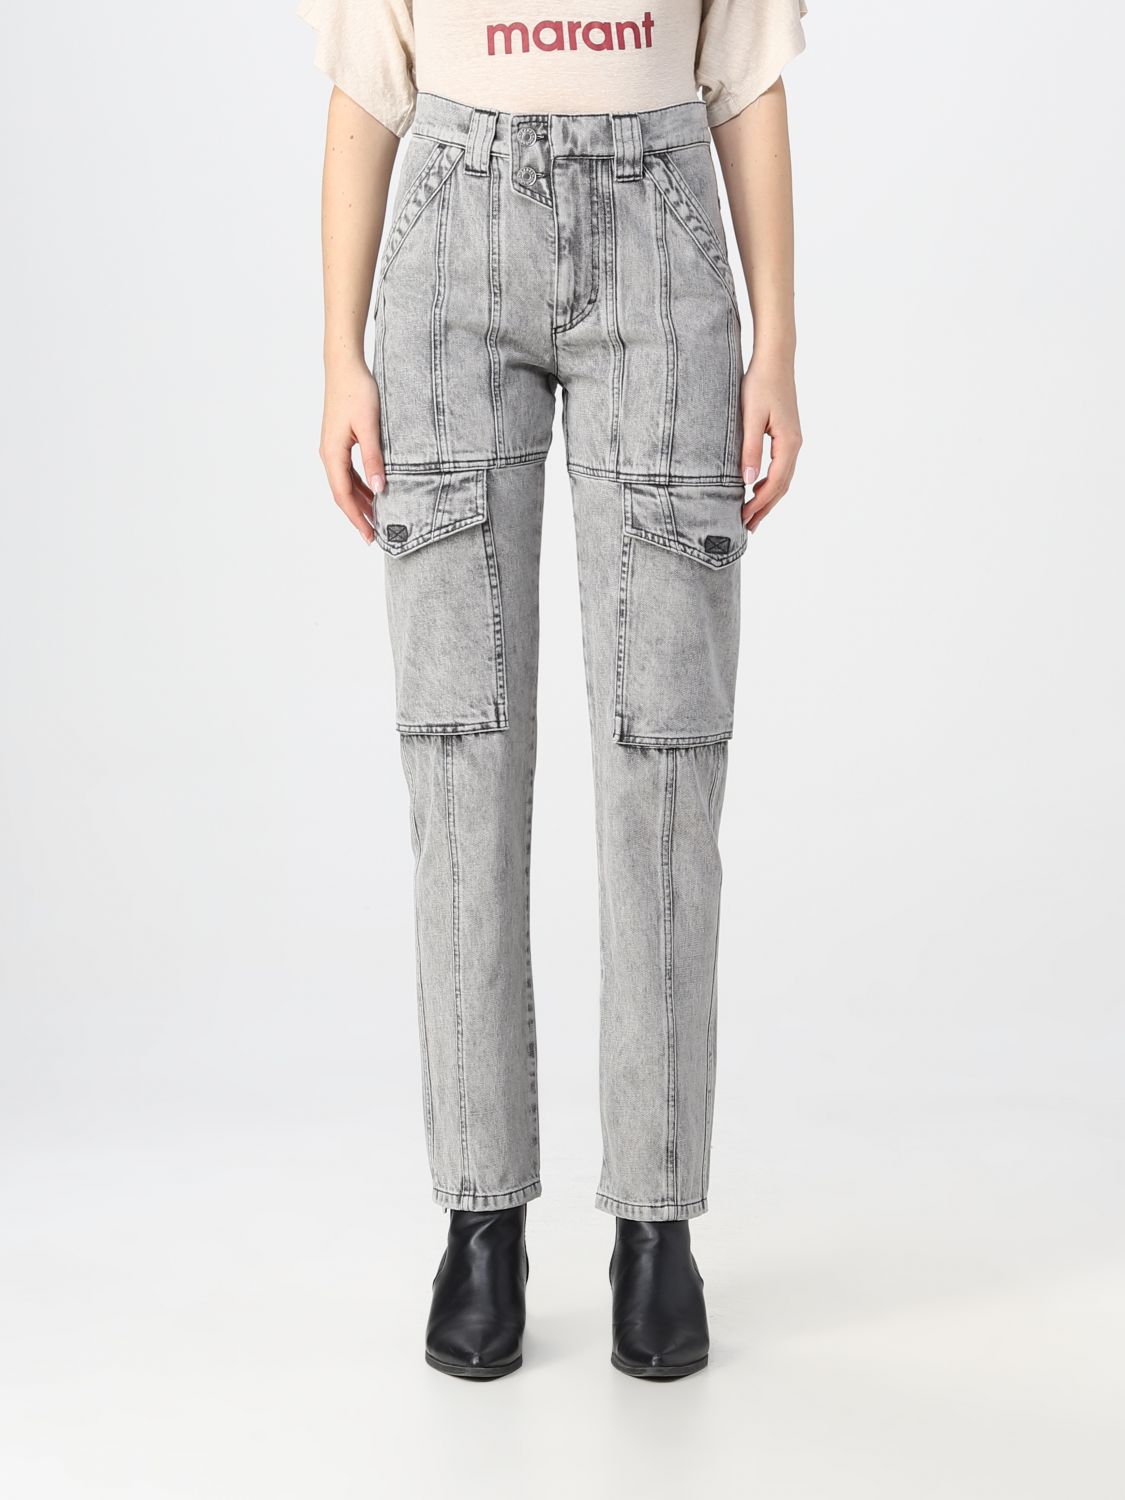 Ongemak Vermoorden bedelaar Isabel Marant Etoile Outlet: jeans for woman - Grey | Isabel Marant Etoile  jeans 22APA222122A023E online on GIGLIO.COM